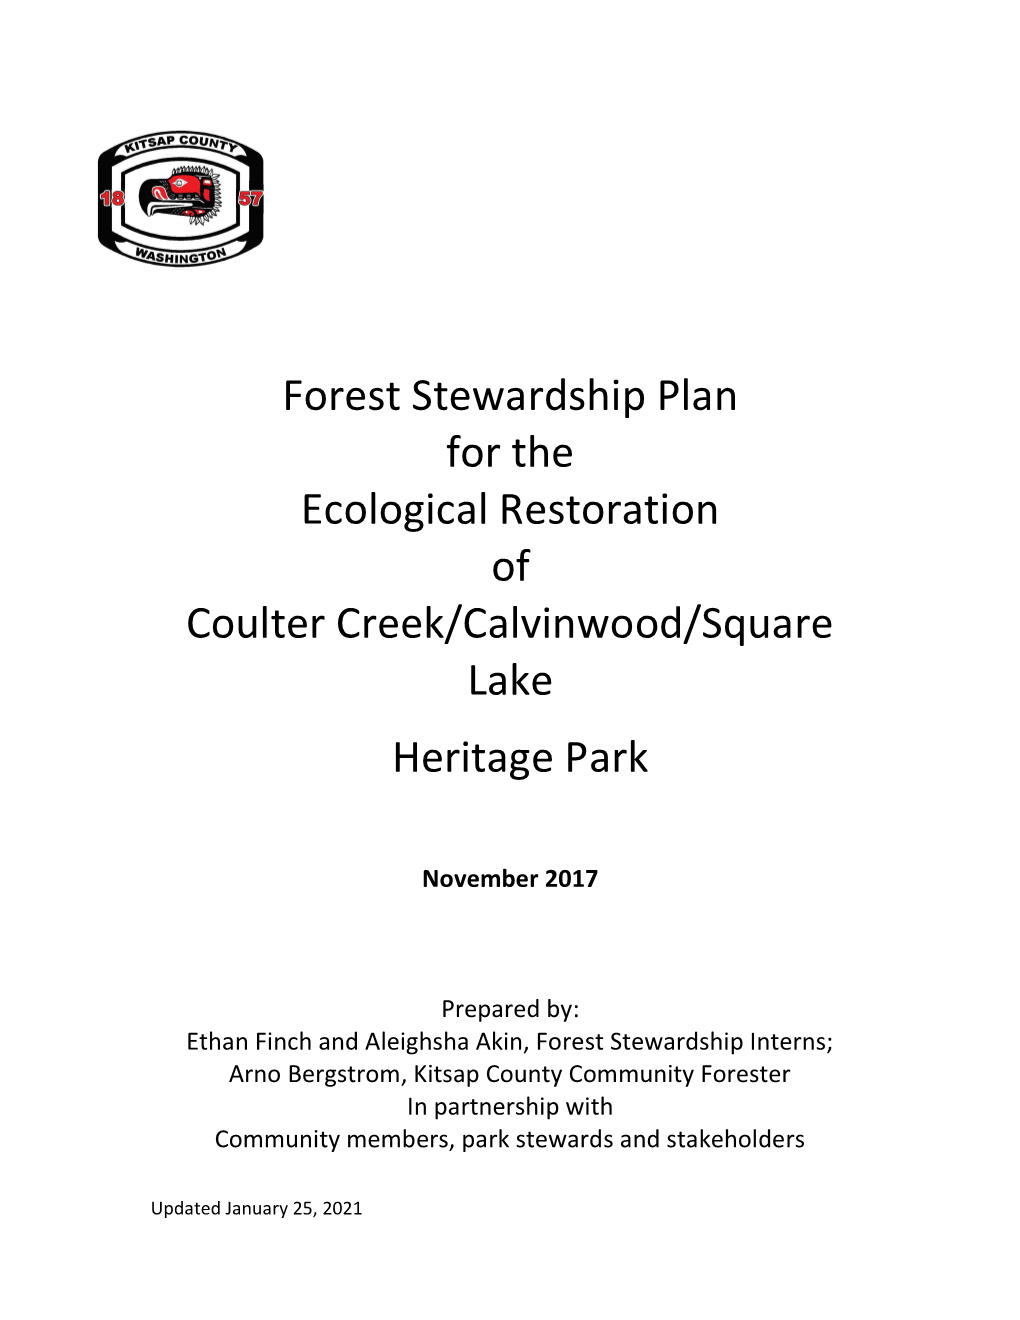 Forest Stewardship Plan for the Ecological Restoration of Coulter Creek/Calvinwood/Square Lake Heritage Park